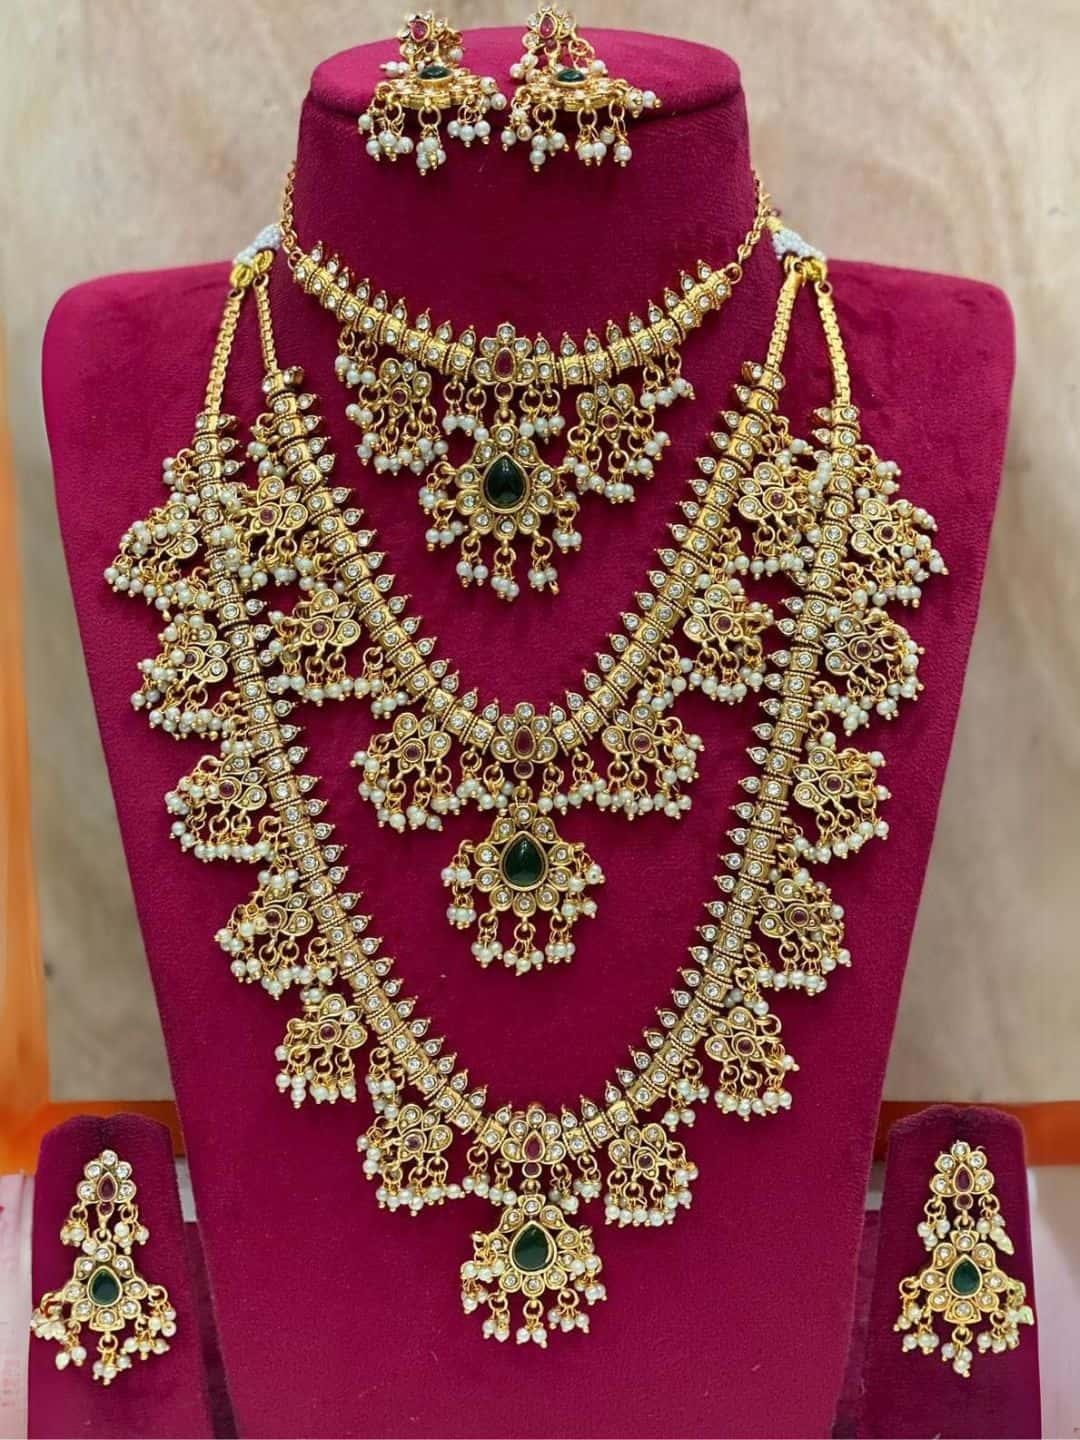 Ishhaara Triple Layer Guttapusalu Haram Necklace With Earrings